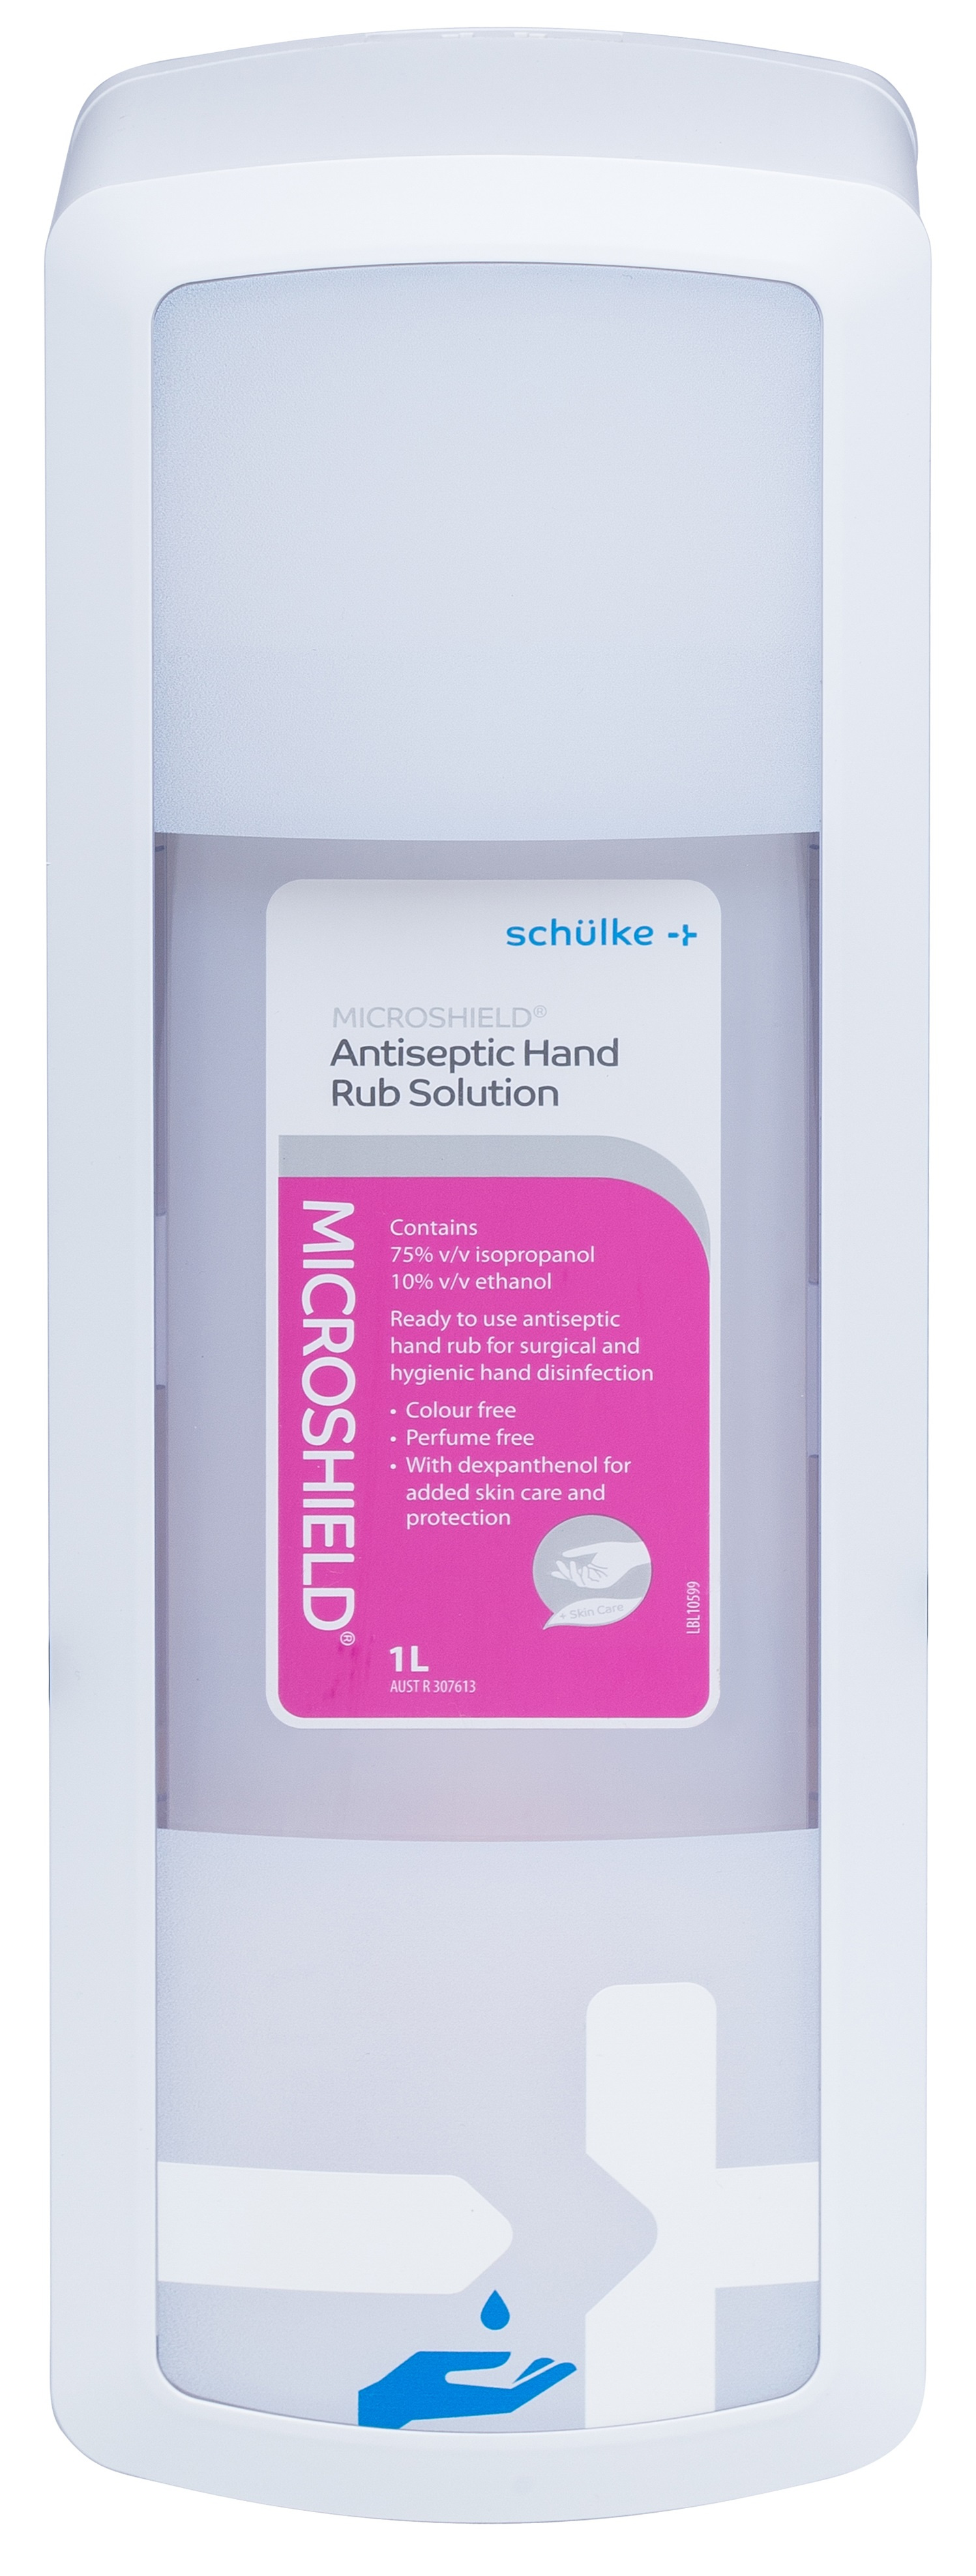 Microshield Antiseptic Hand Rub Solution 1000ml image 1